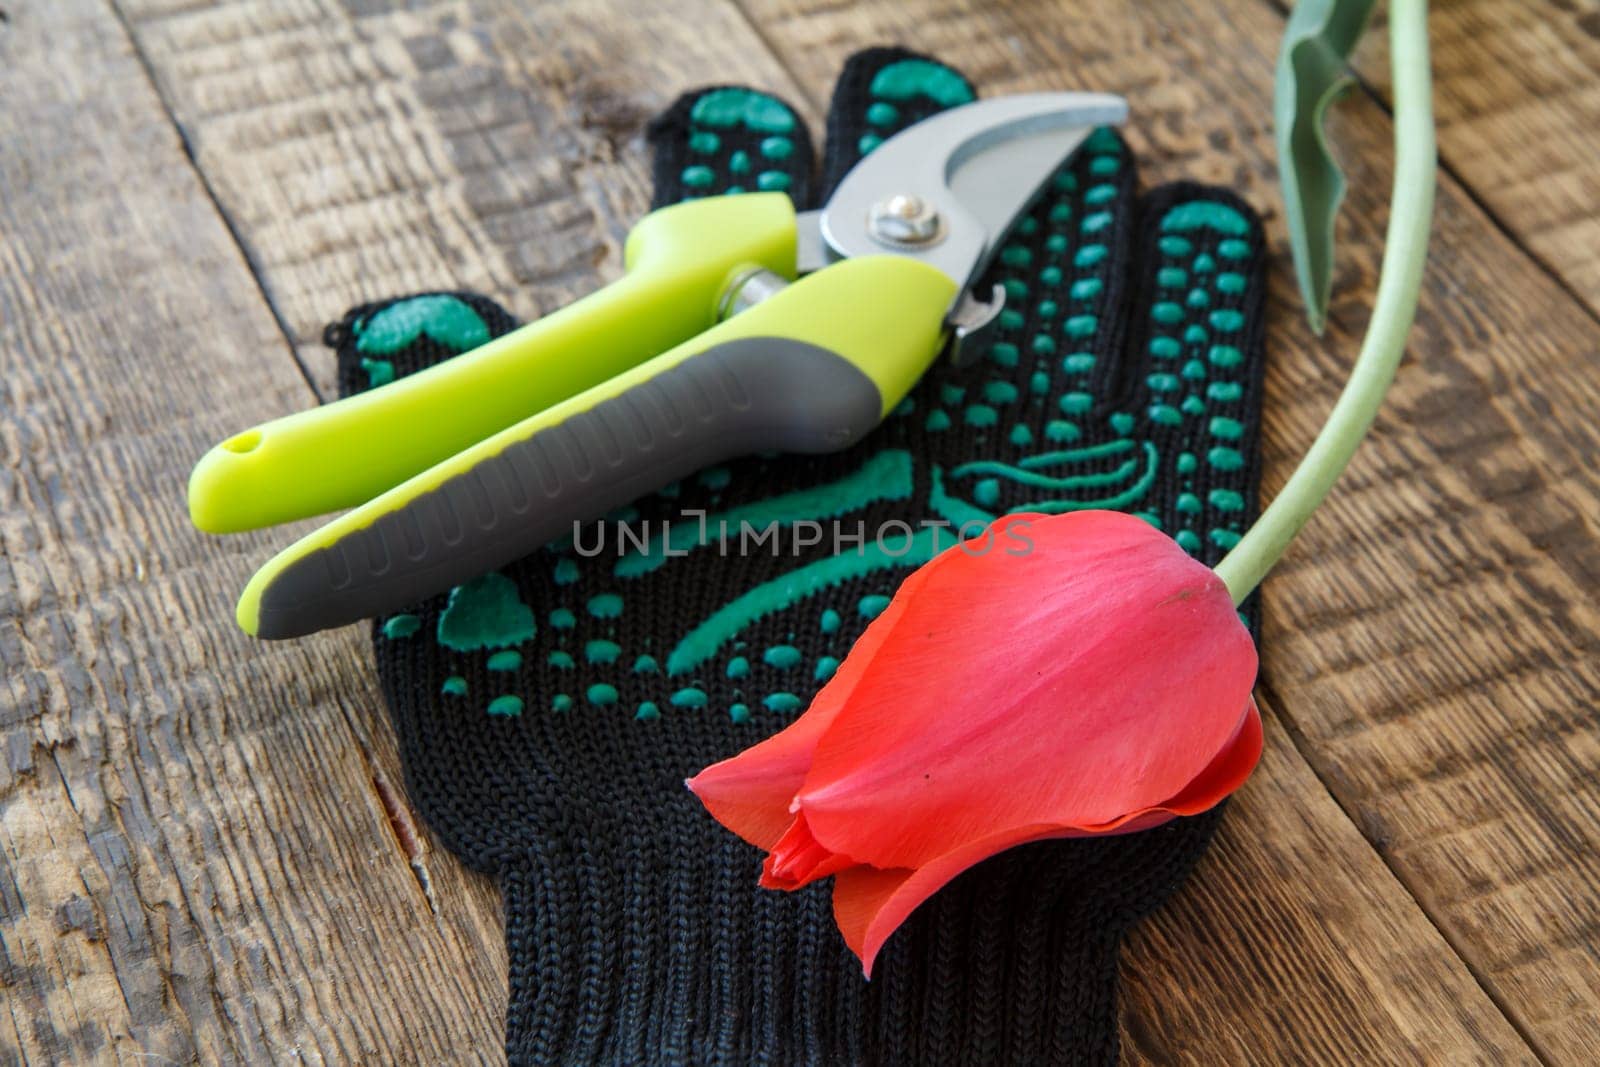 Garden glove, pruner and cut tulip on wooden board. Garden tools and equipment